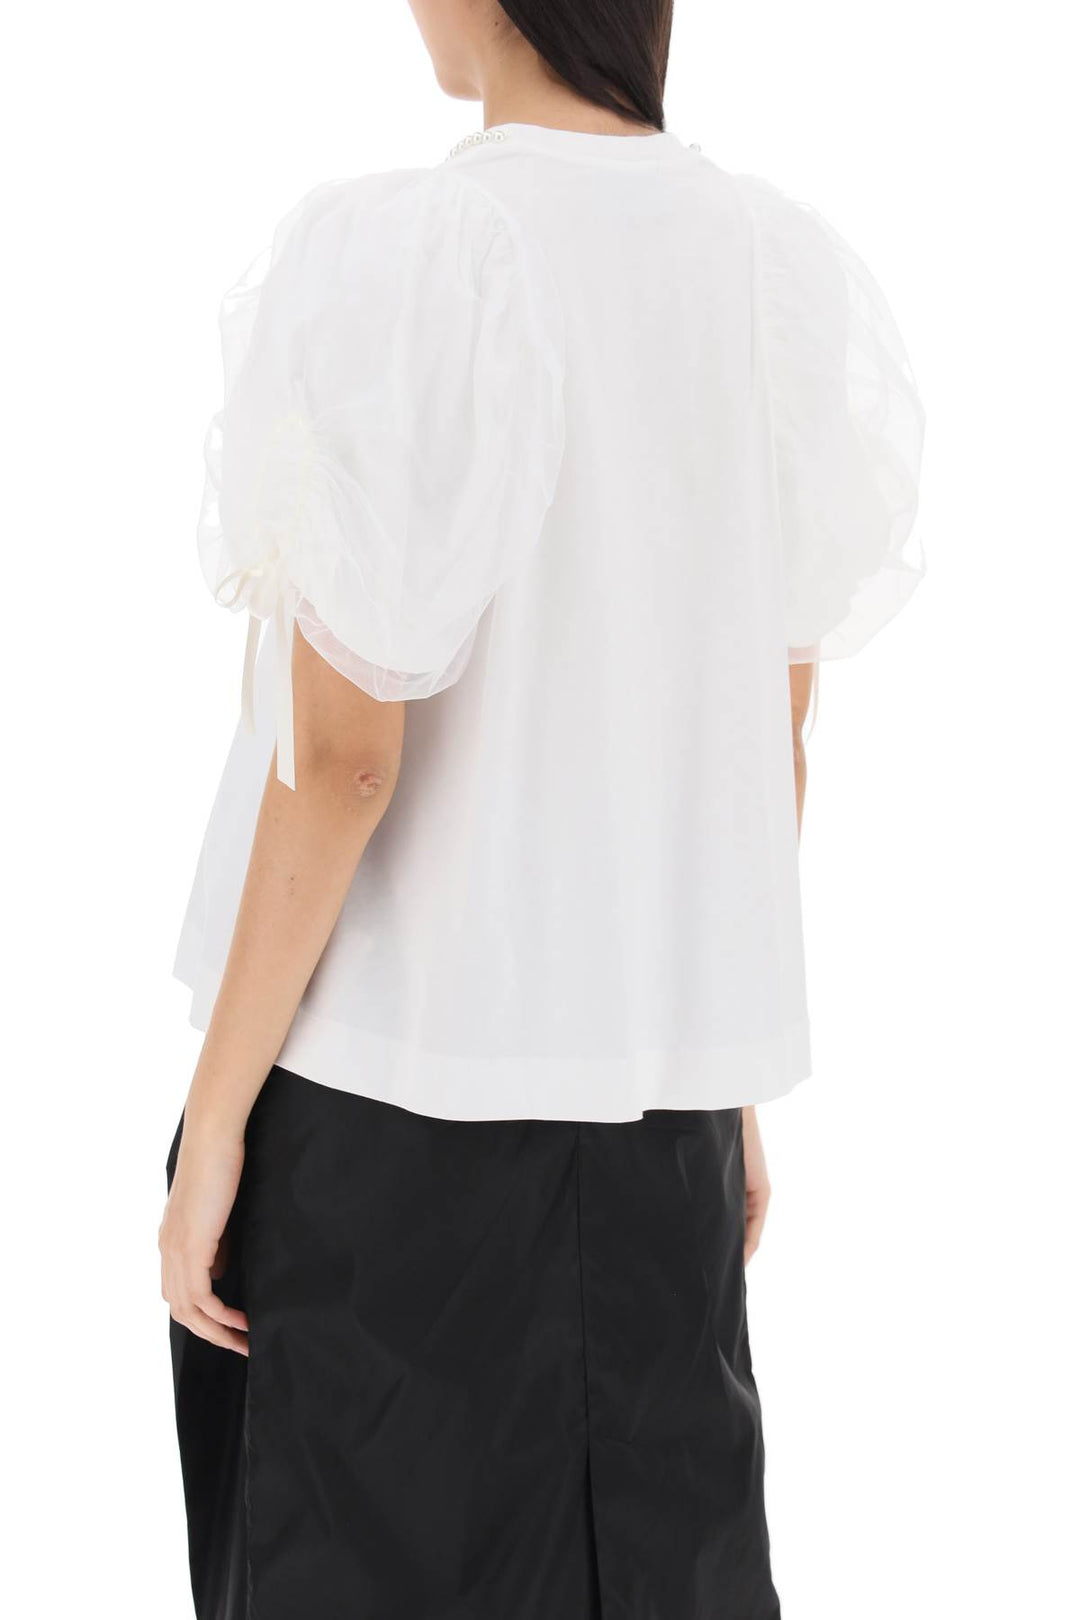 Simone rocha puff sleeves t-shirt-2